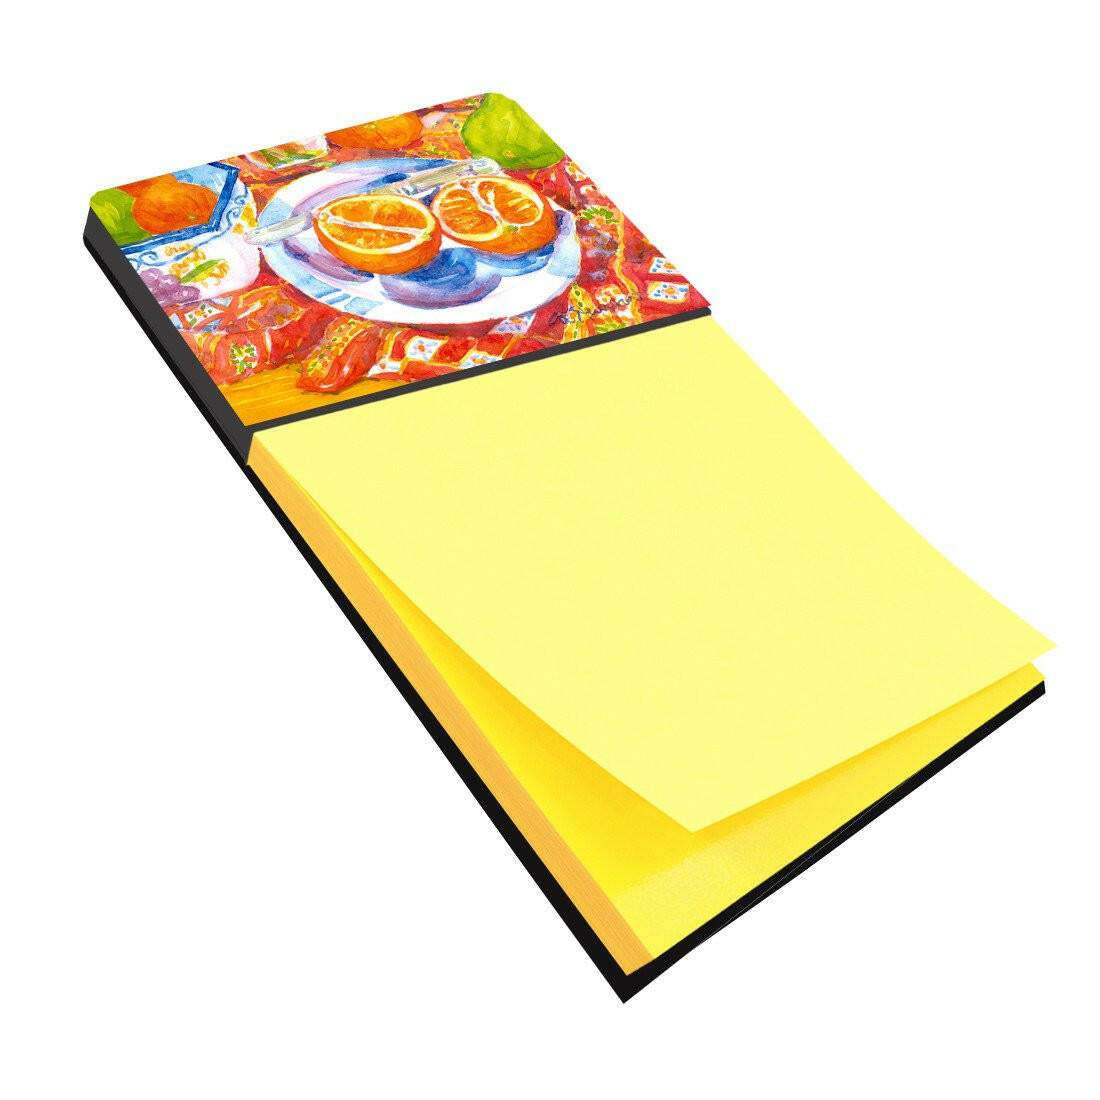 Florida Oranges Sliced for breakfast Refiillable Sticky Note Holder or Postit Note Dispenser 6035SN by Caroline's Treasures